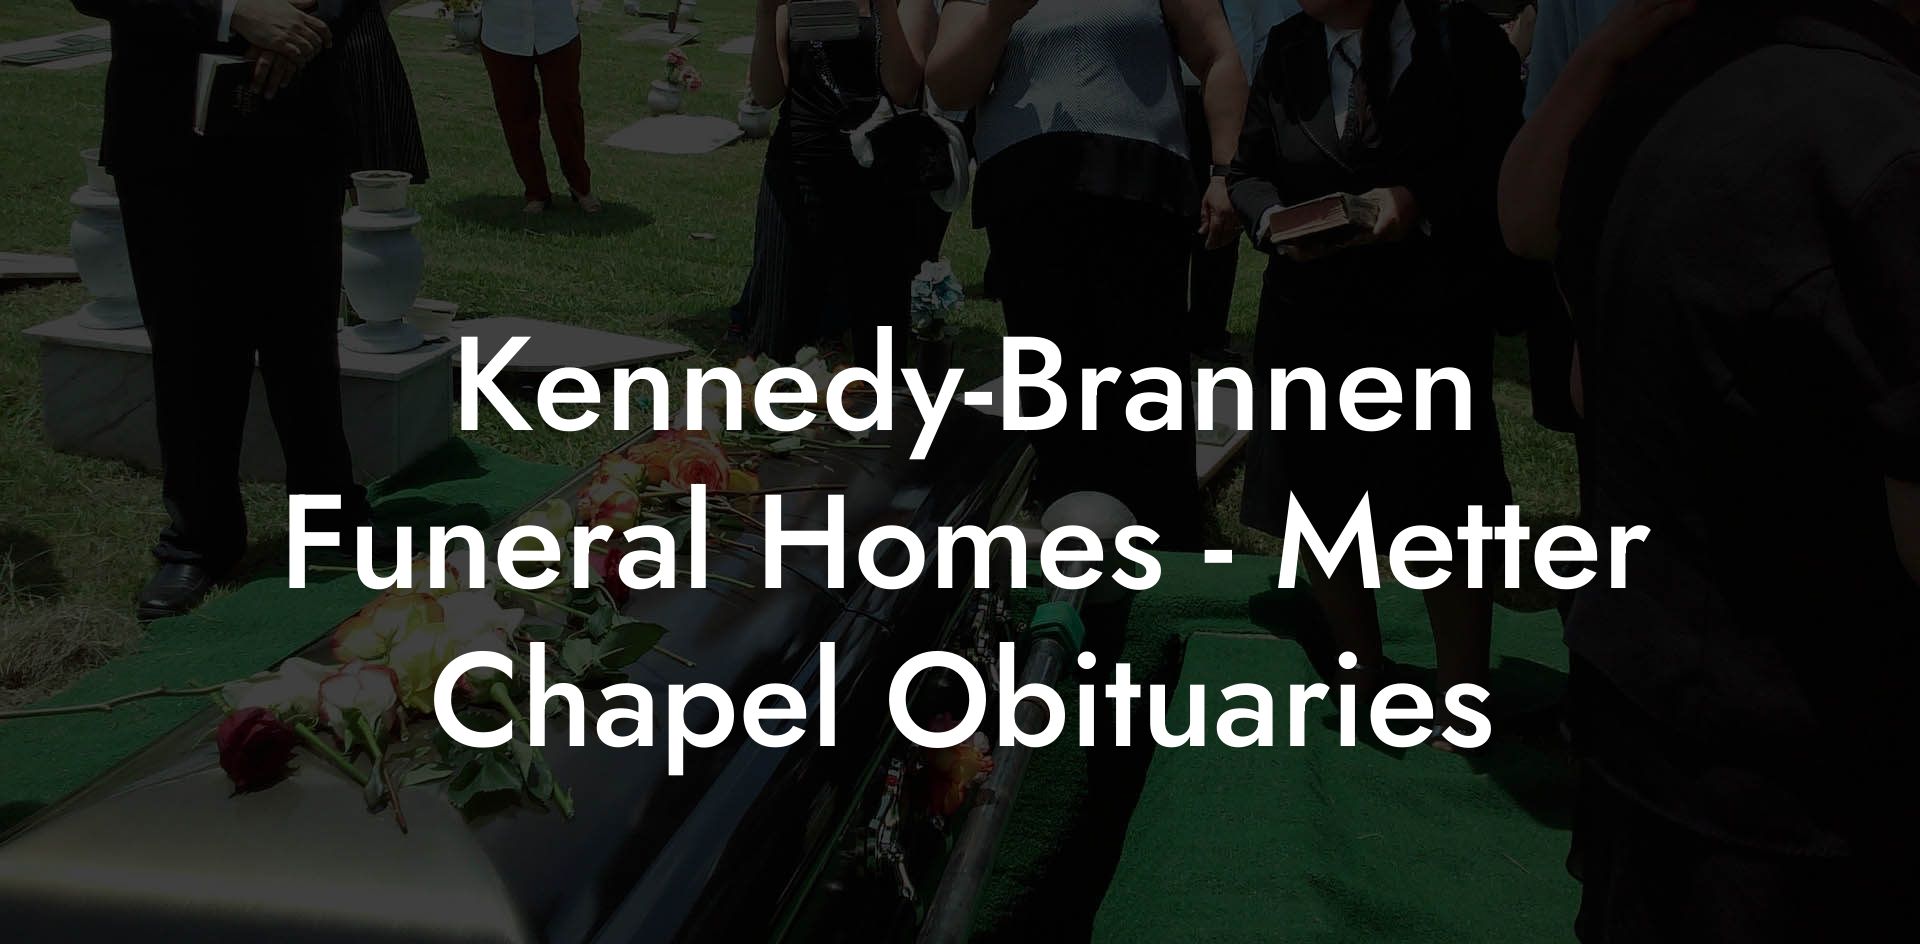 Kennedy-Brannen Funeral Homes - Metter Chapel Obituaries